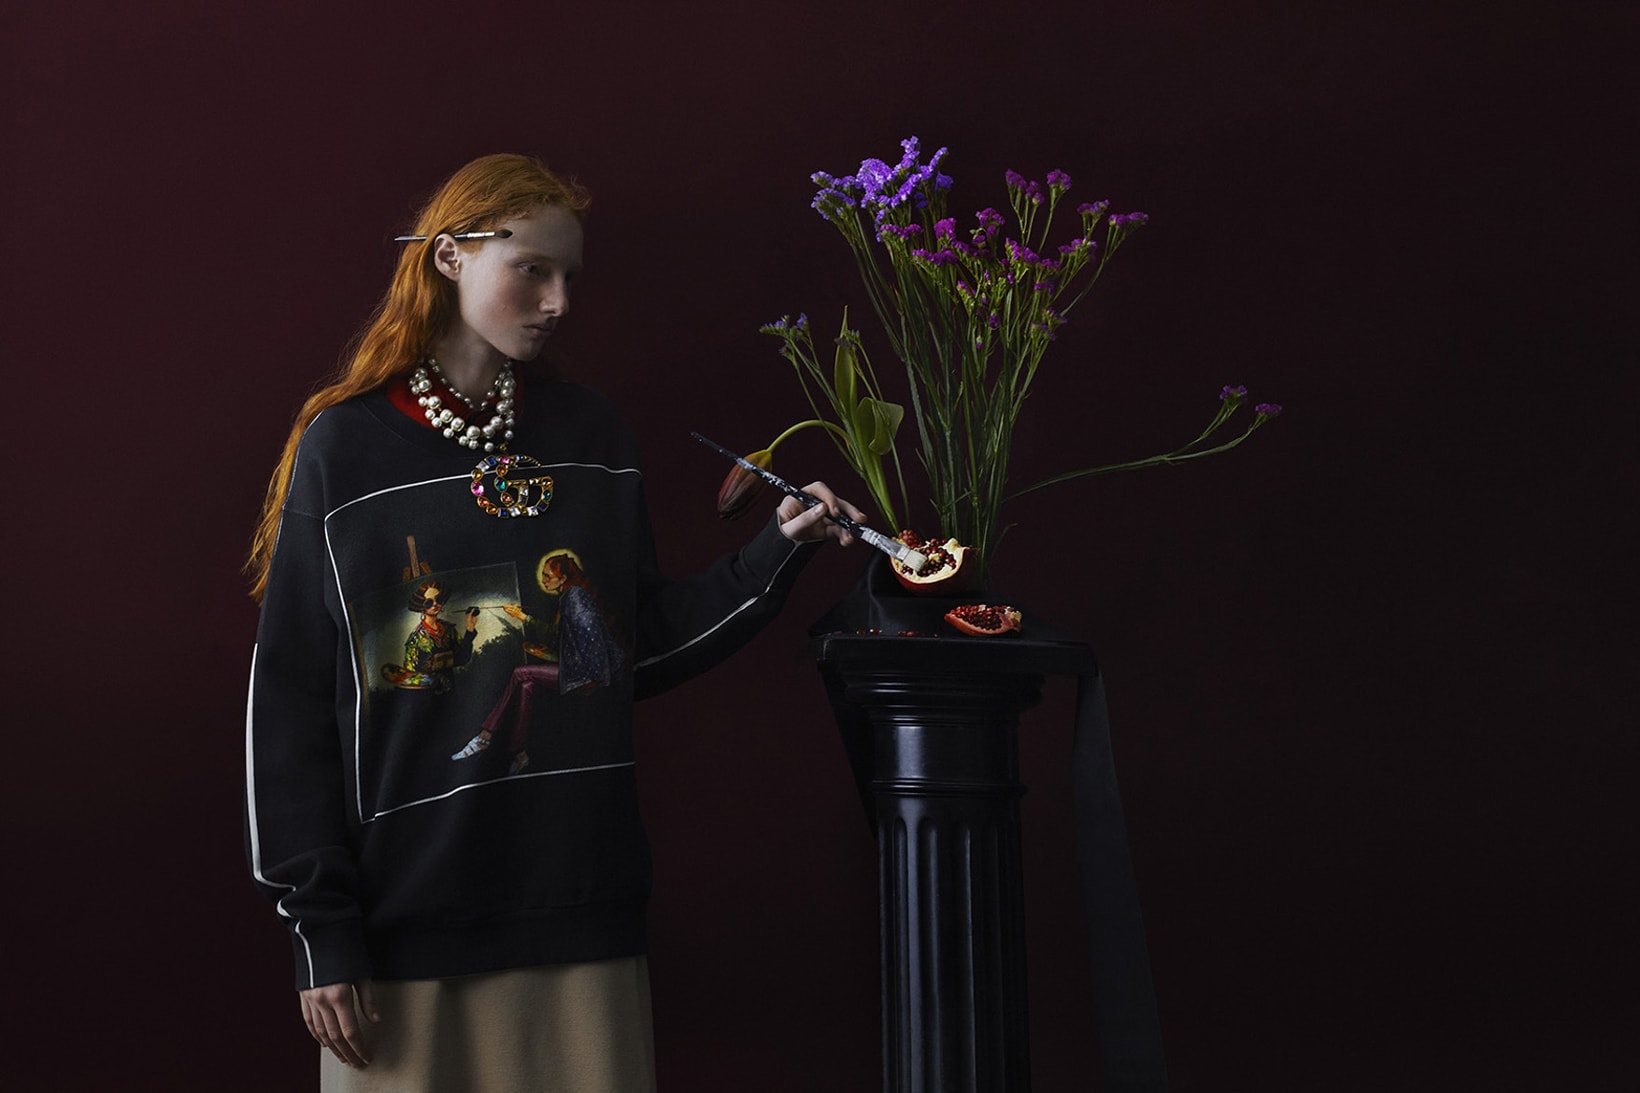 Gucci #GucciHallucination Capsule Collection Sweatshirt Black